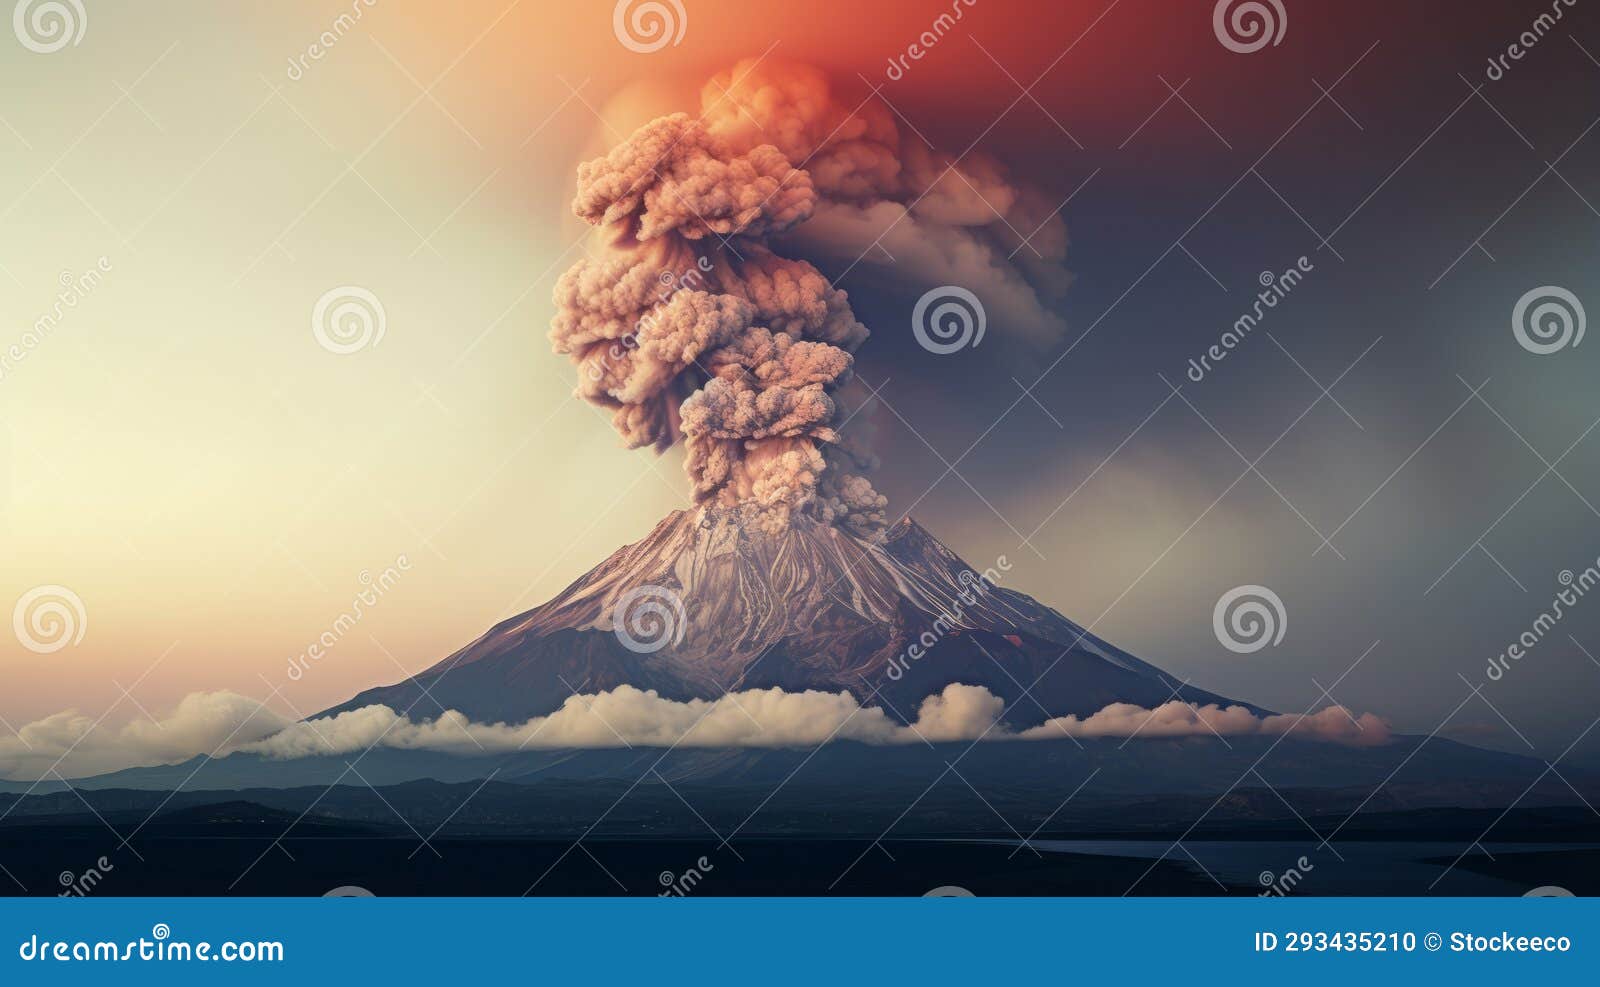 award-winning volcano photo with cross processing style